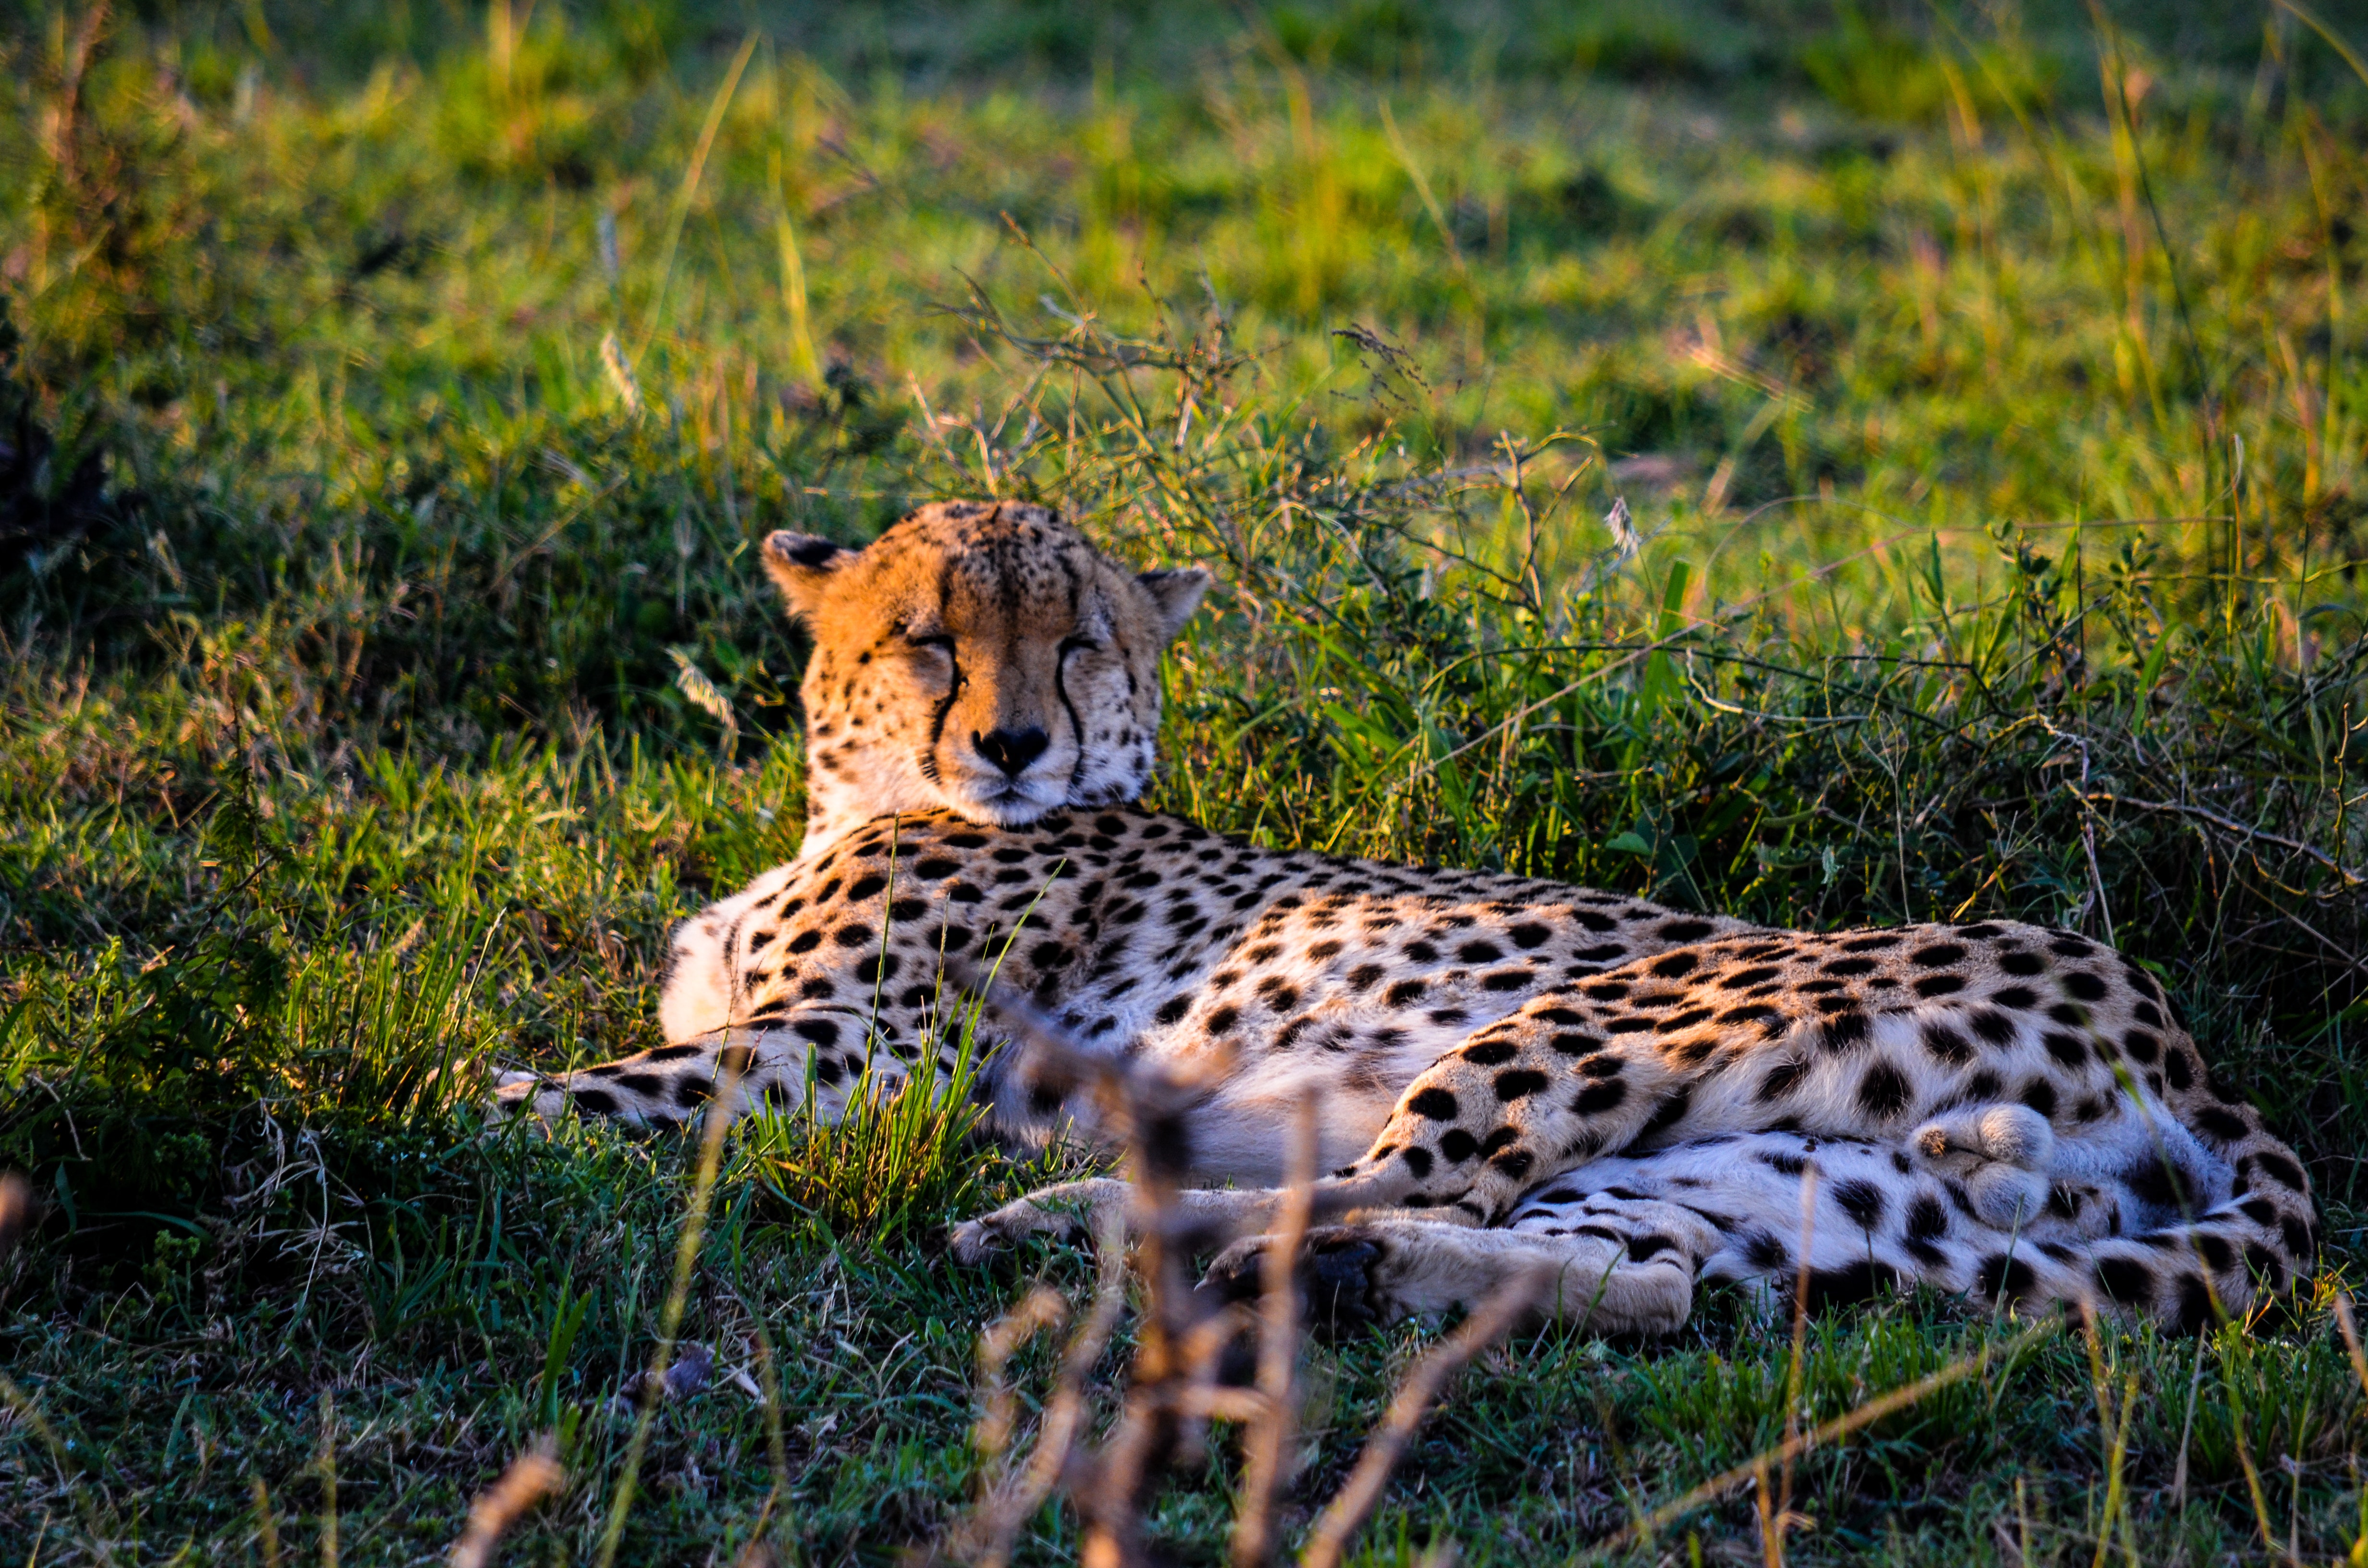 Leopard Lying On The Grass, Africa, Wildlife, Wild cat, Wild animal, HQ Photo